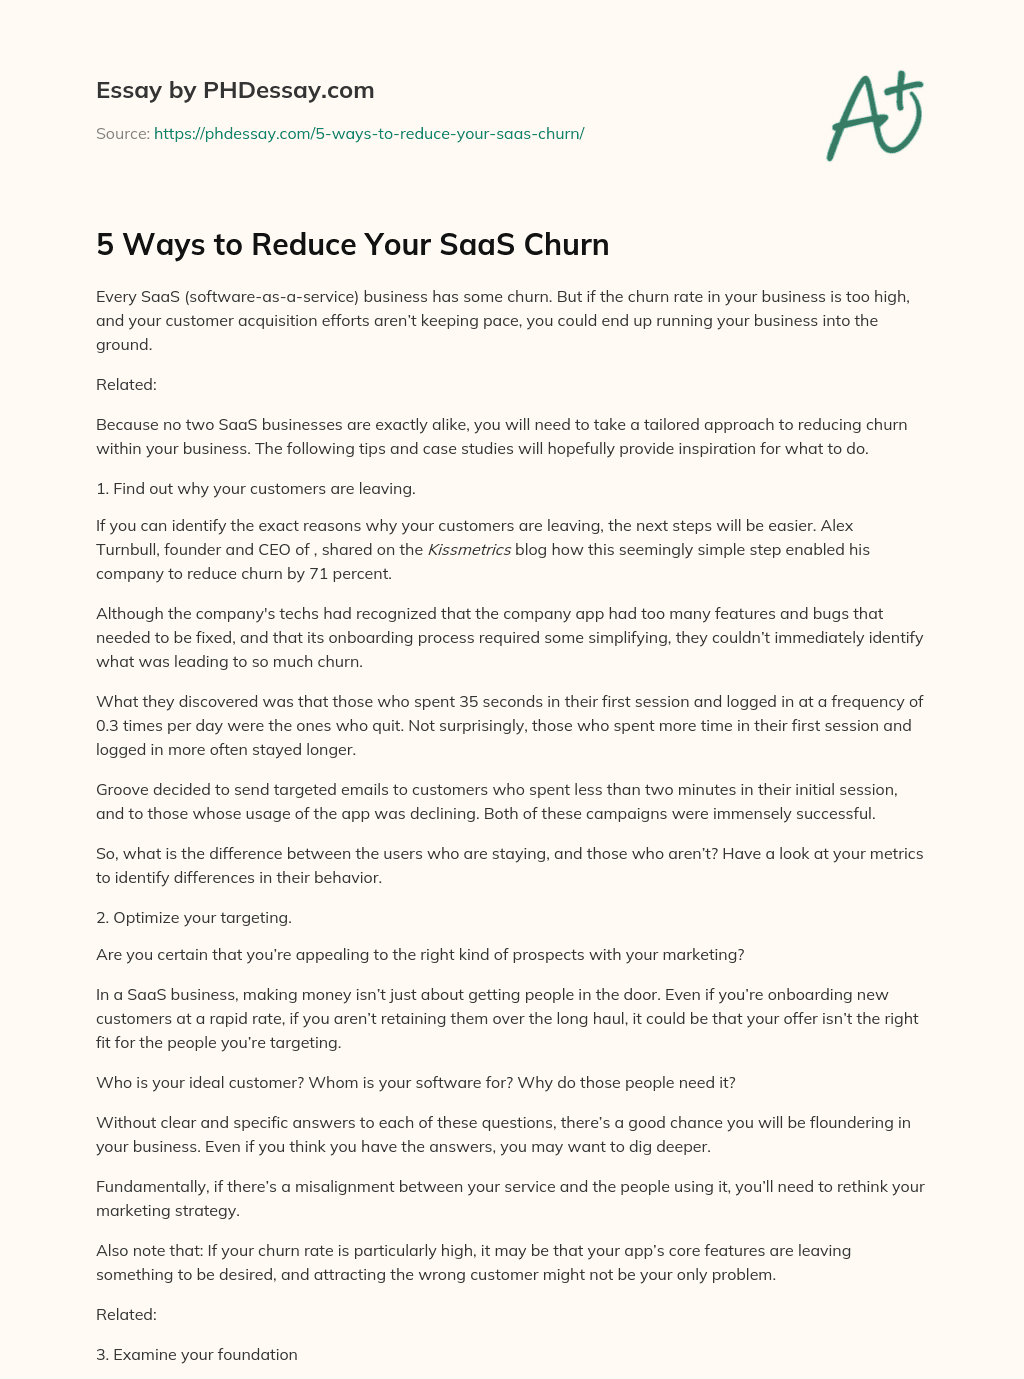 5 Ways to Reduce Your SaaS Churn essay